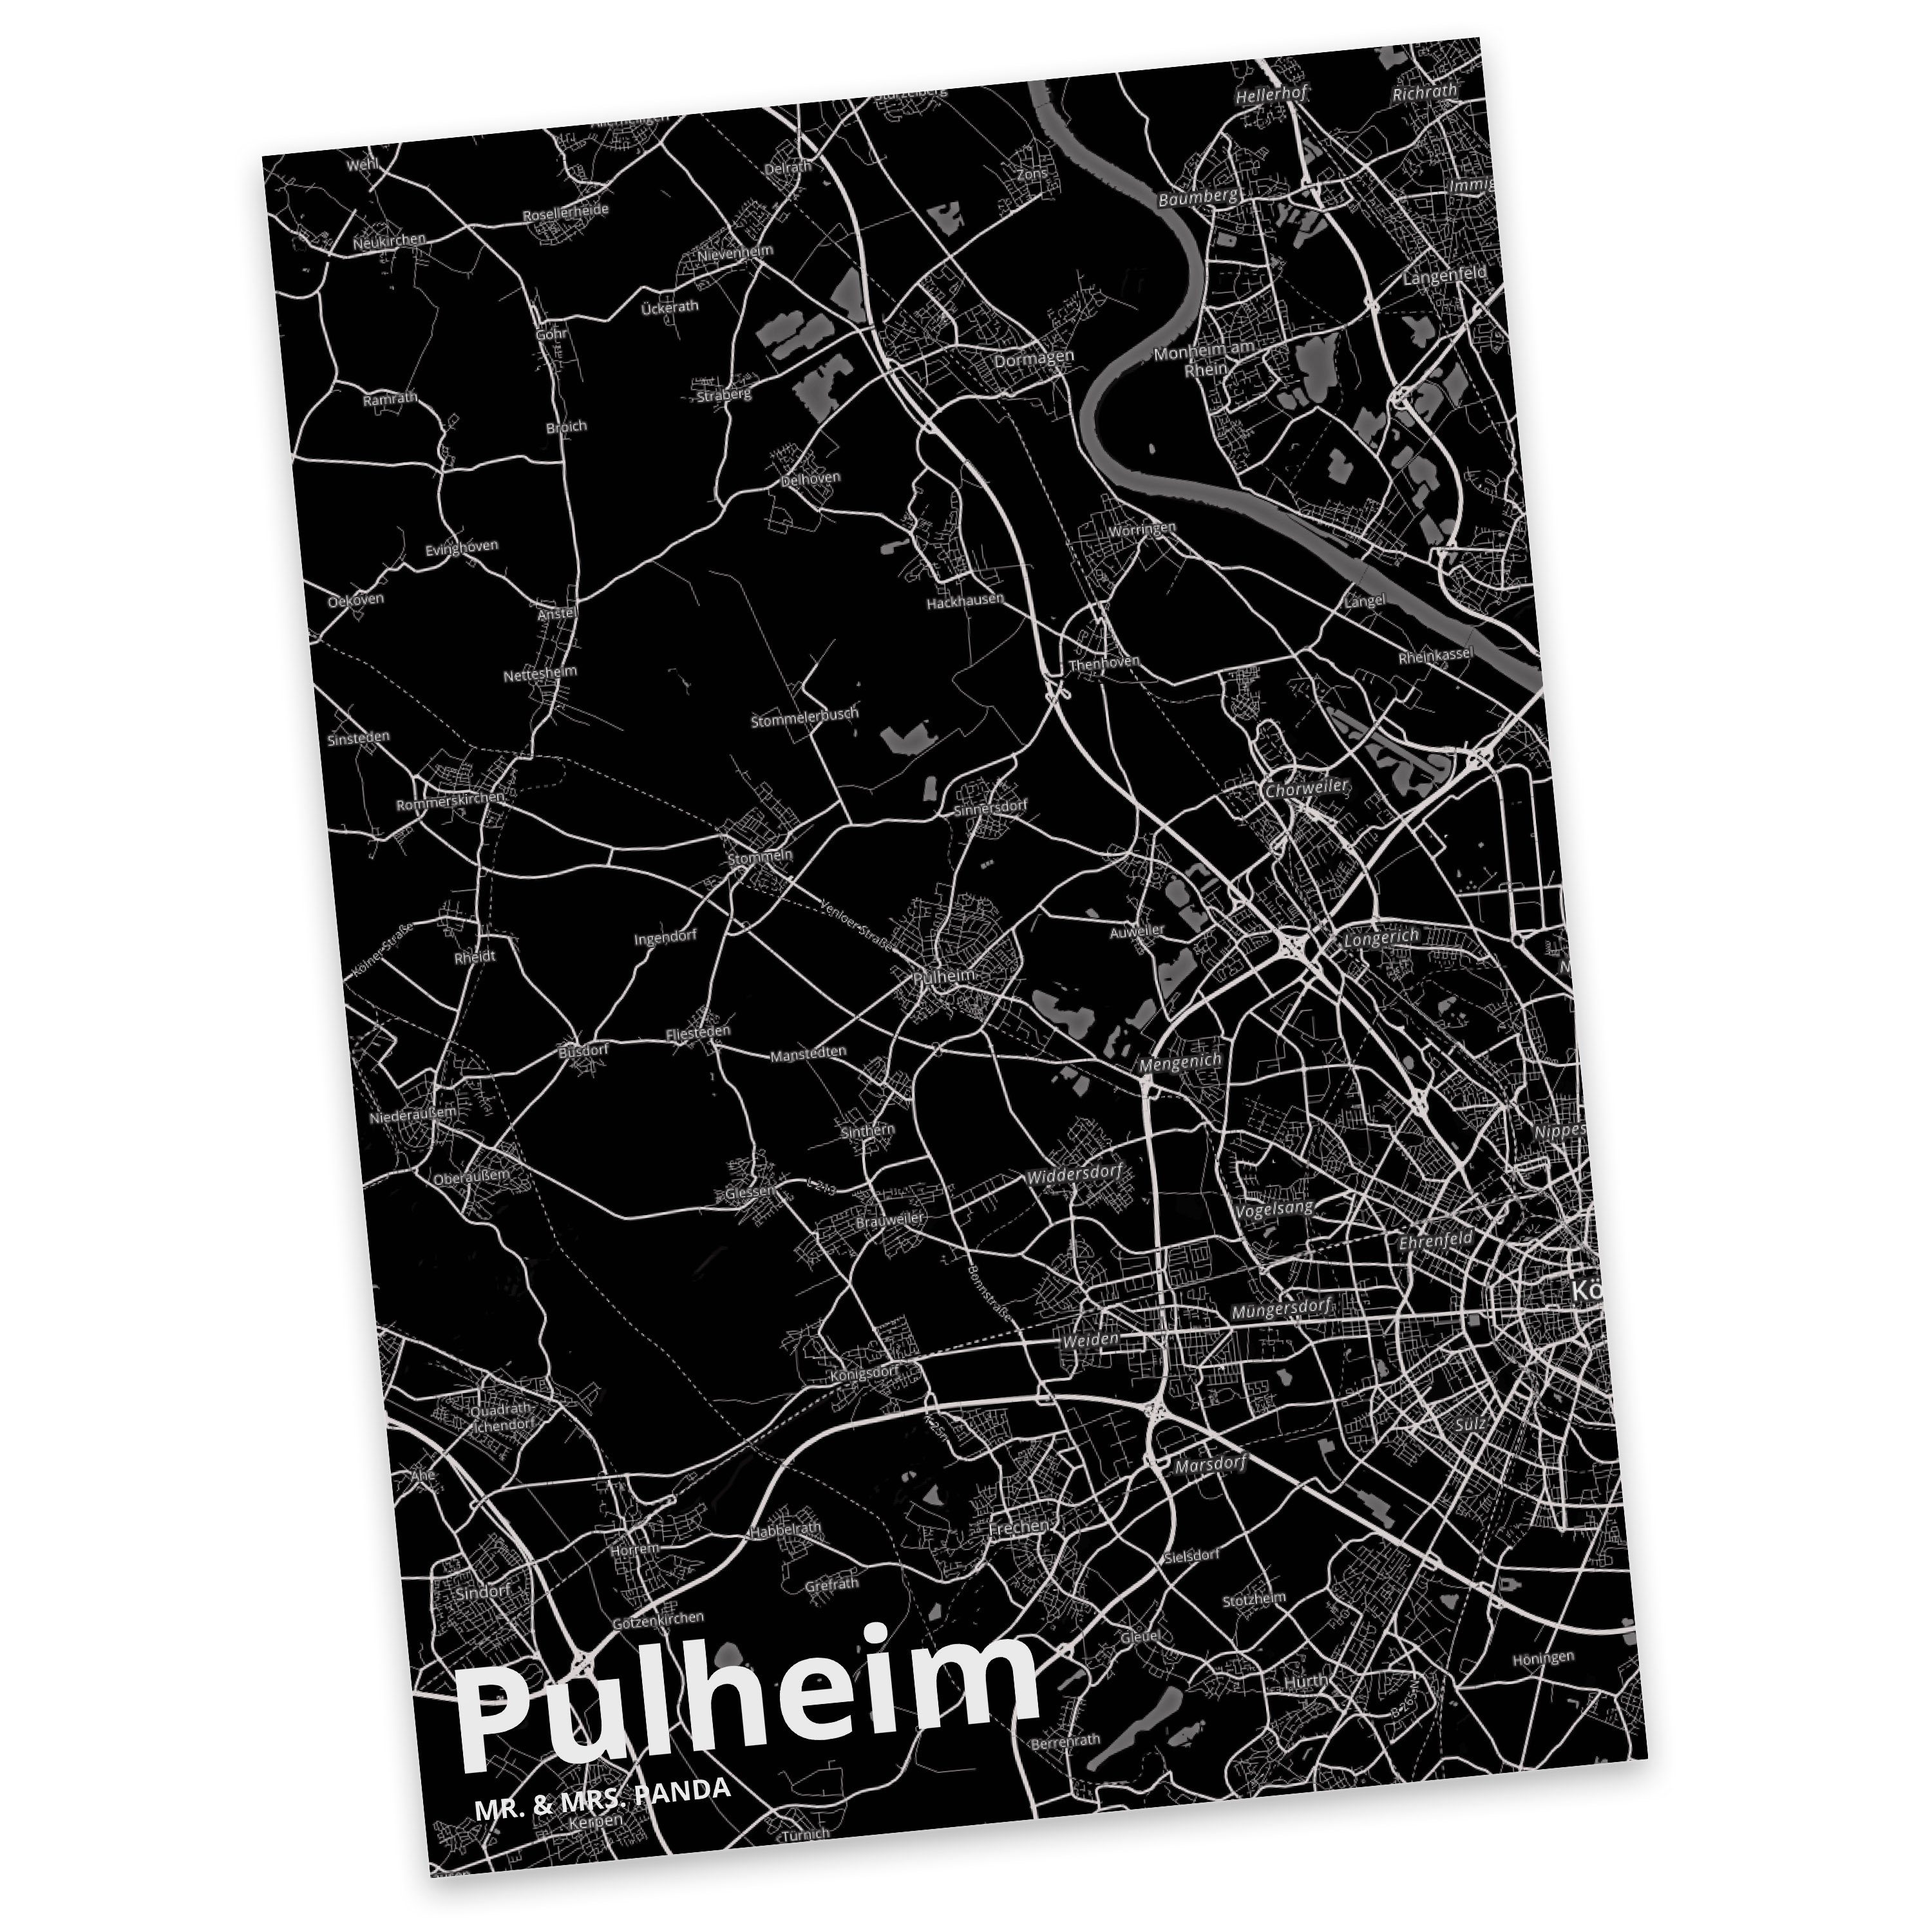 Mr. & Mrs. Panda Postkarte Pulheim - Geschenk, Dorf, Stadt, Stadt Dorf Karte Landkarte Map Stadt